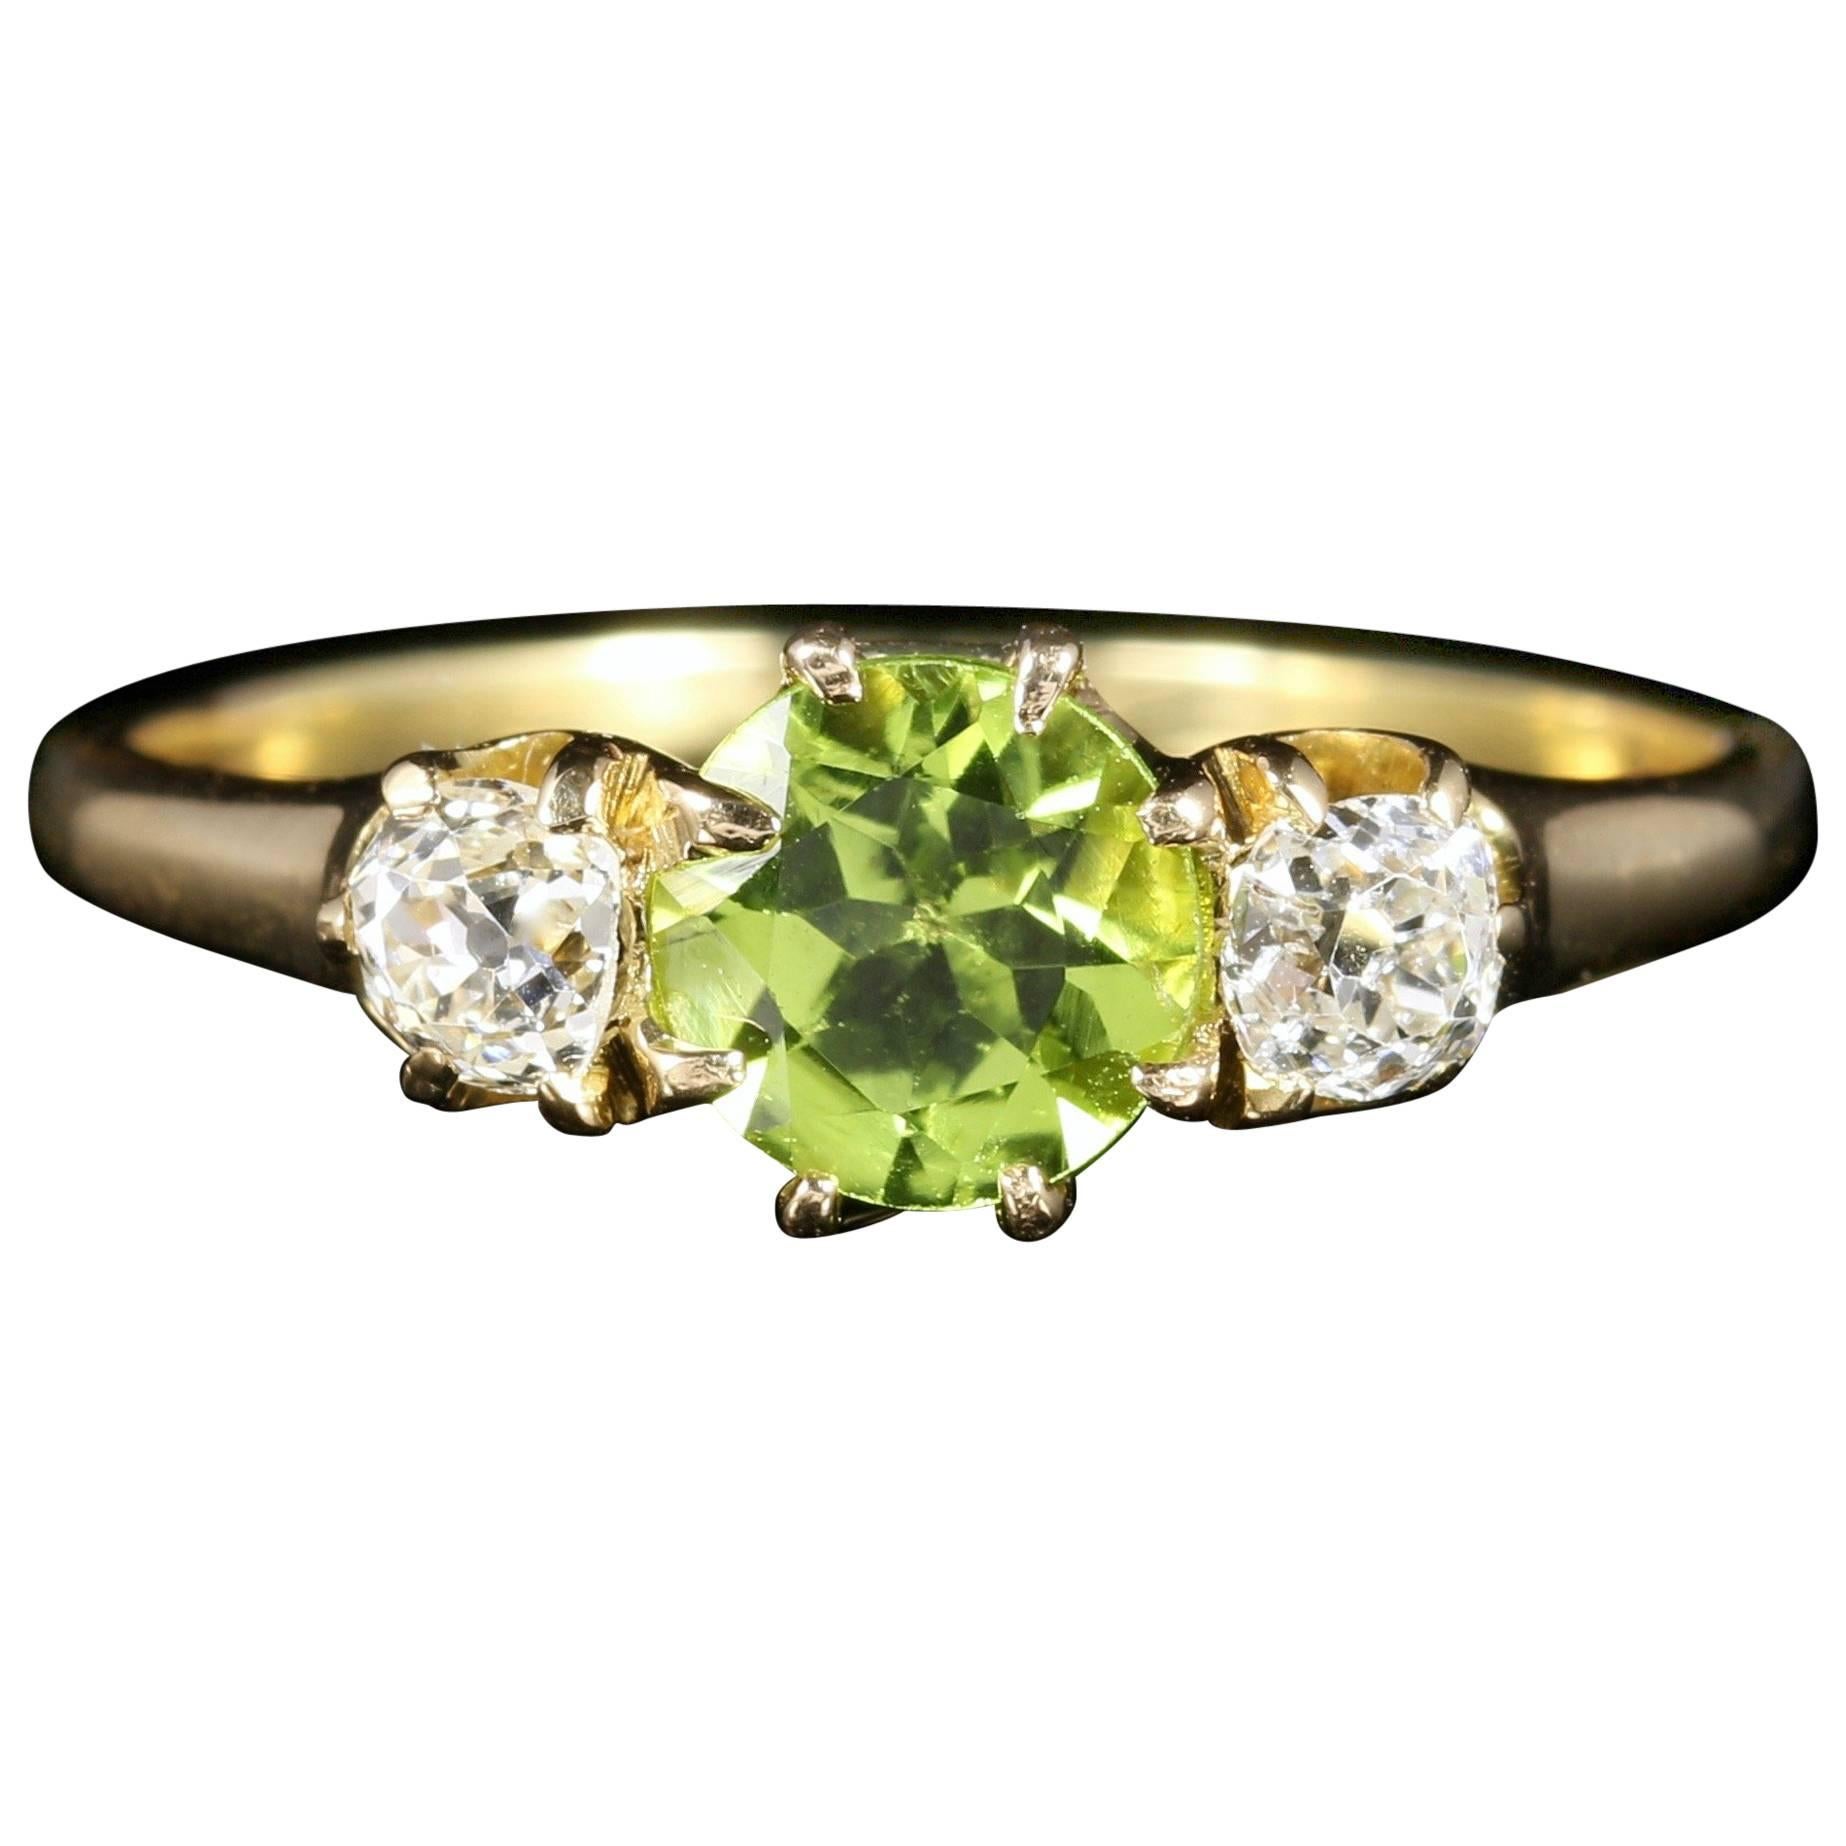 Antique Victorian Peridot Diamond Ring Trilogy 18 Carat Gold, circa 1890